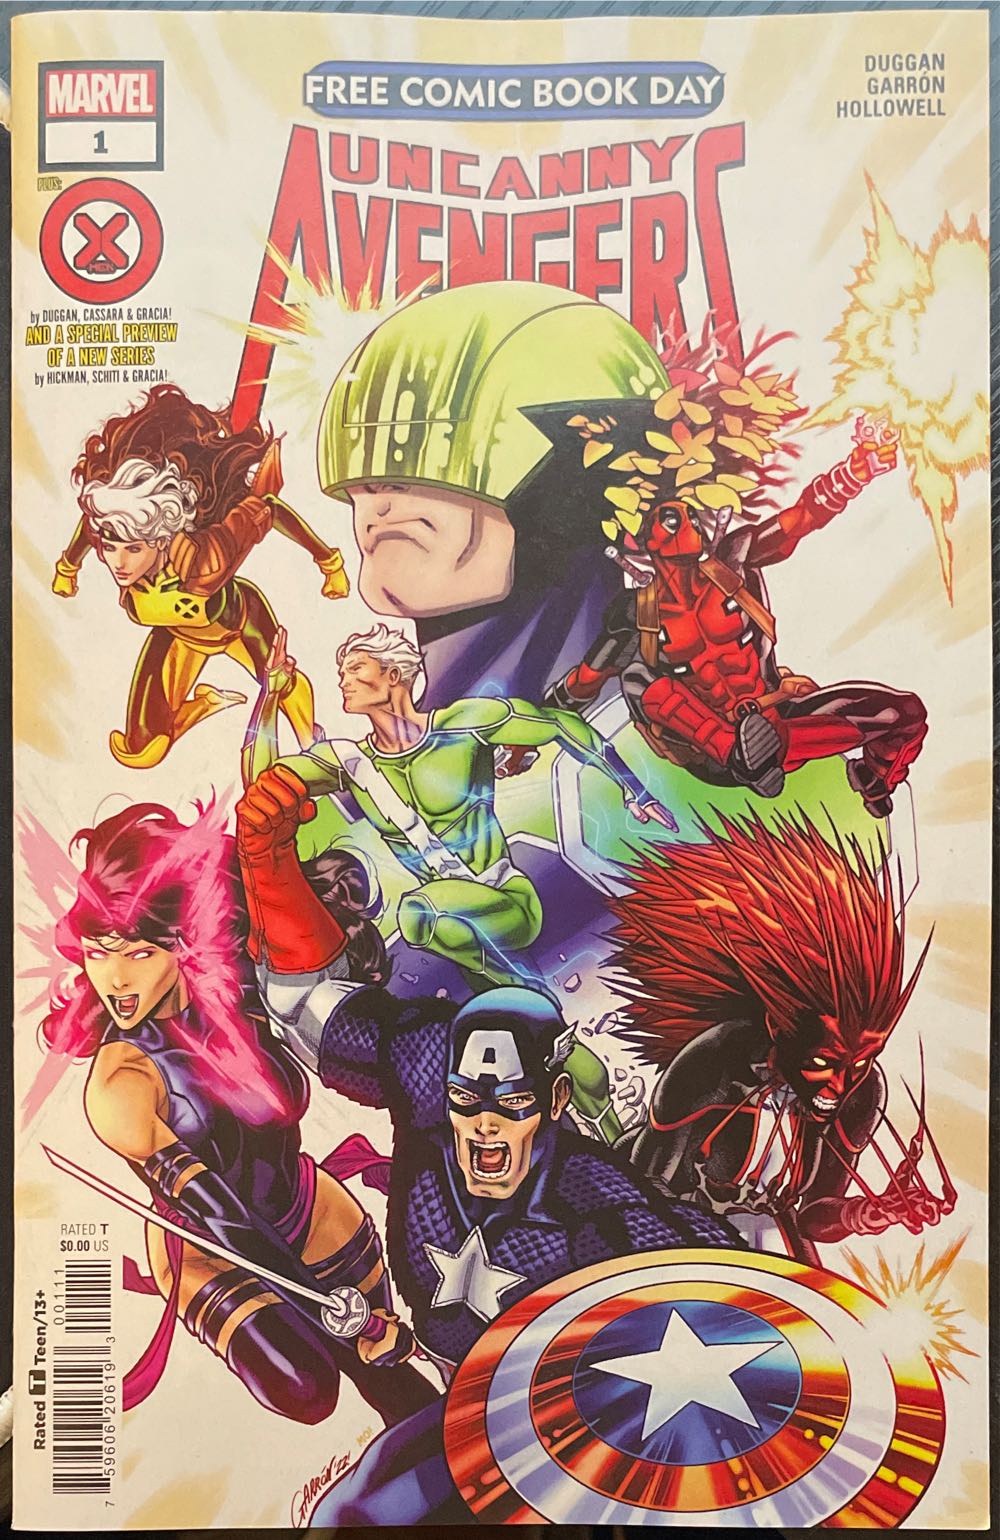 Free Comic Book Day 2023: Avengers/X-Men - Marvel Comics (1 - Jul 2023) comic book collectible [Barcode 75960620619300111] - Main Image 2